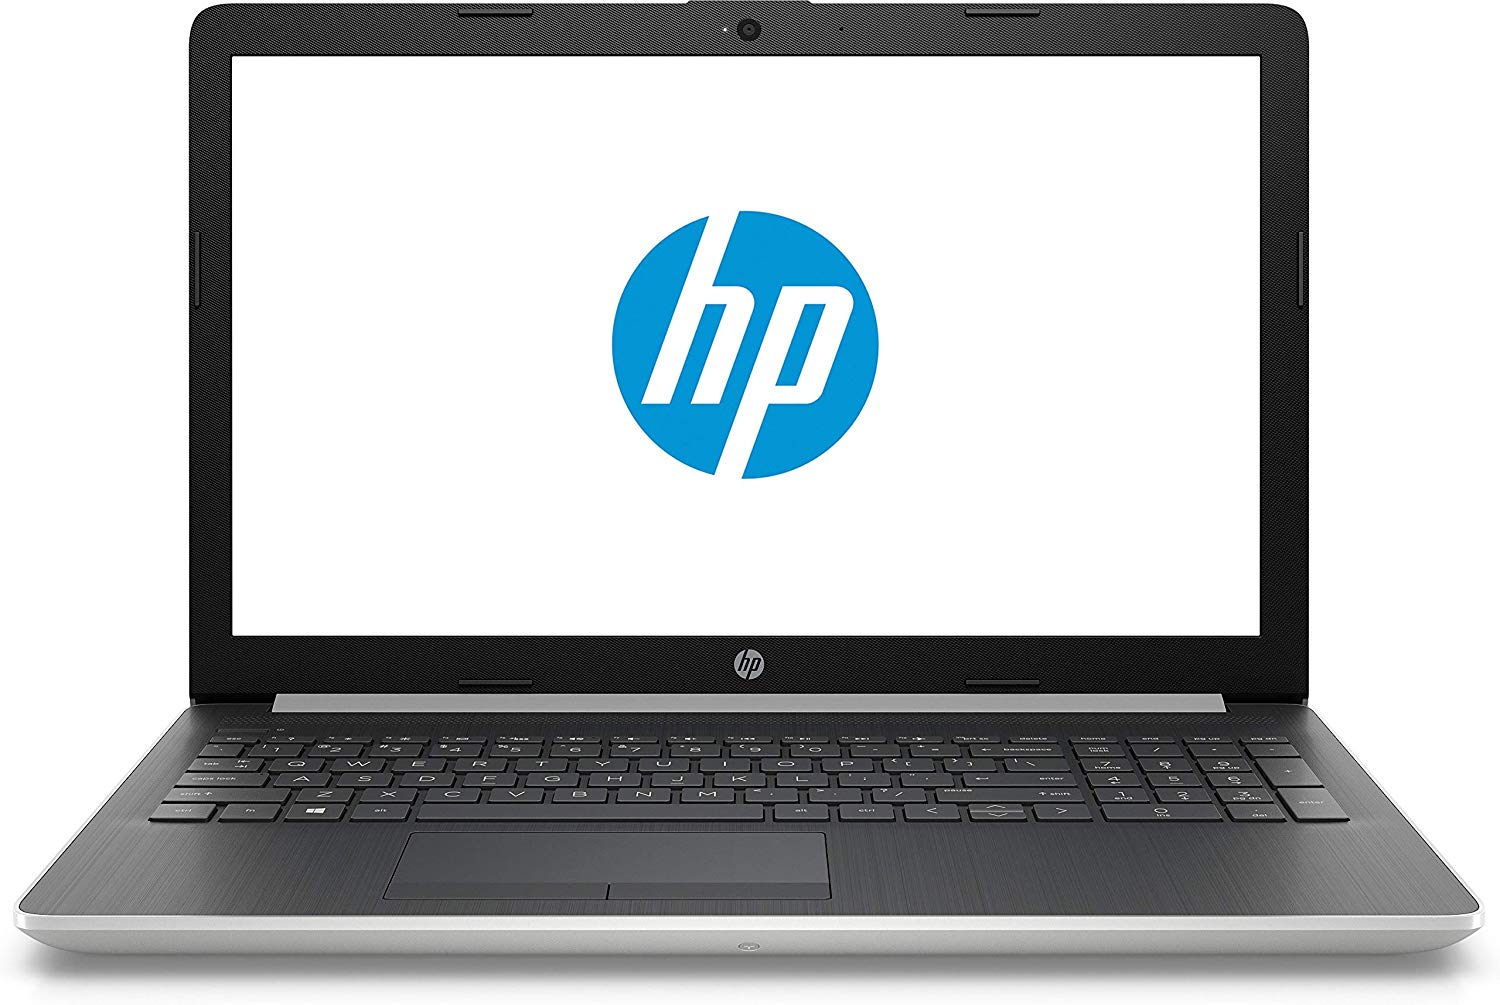 HP 15-da1030tu (Core i5 - 8th Gen /4 GB/1 TB/39.624 cm (15.6 Inch) FHD/Window 10 with MS Office Home & Student 2016) (Silver, 2.18 kg )